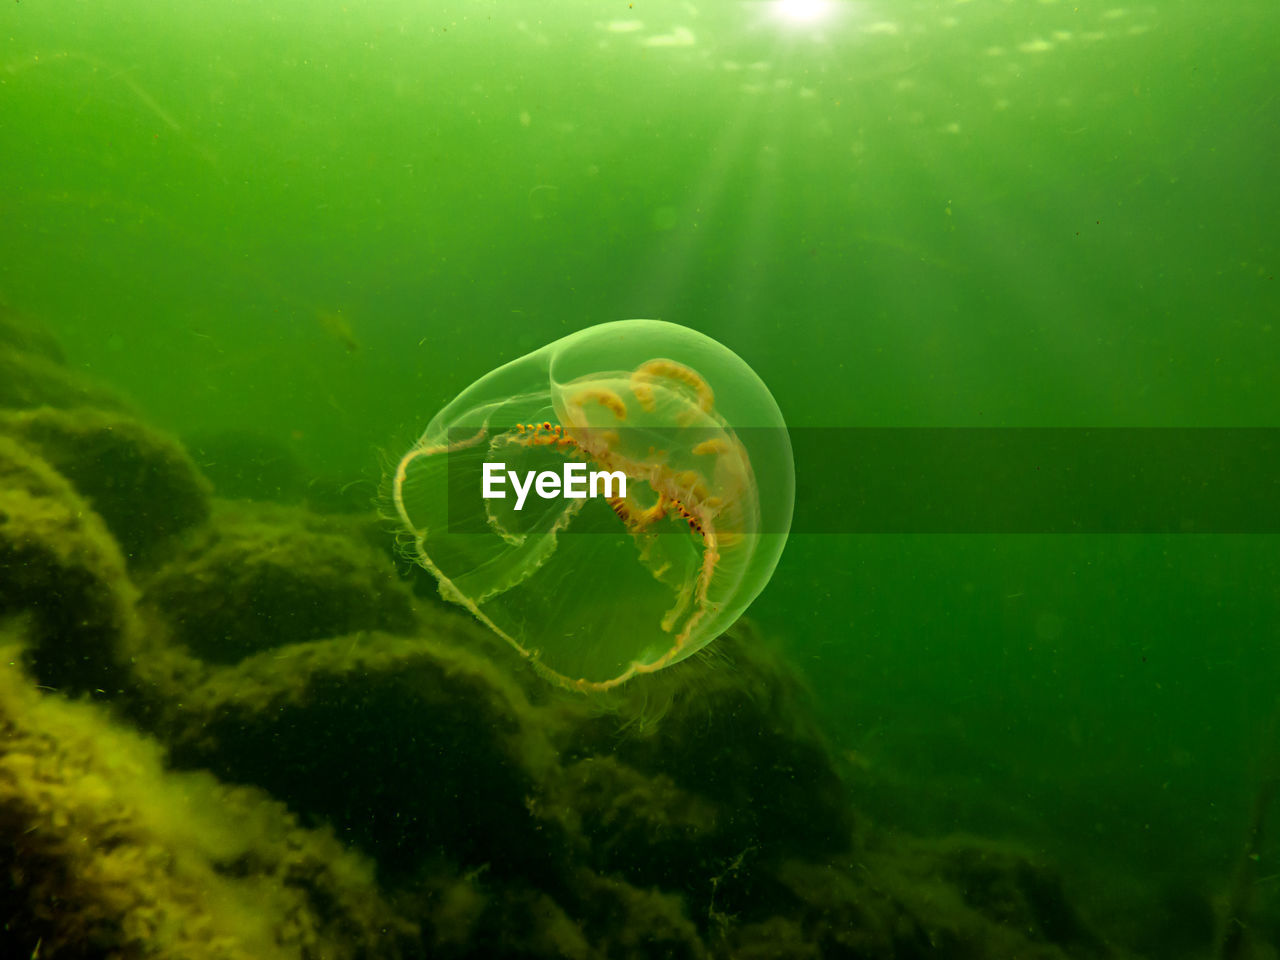 A moon jellyfish or aurelia aurita in green ocean water